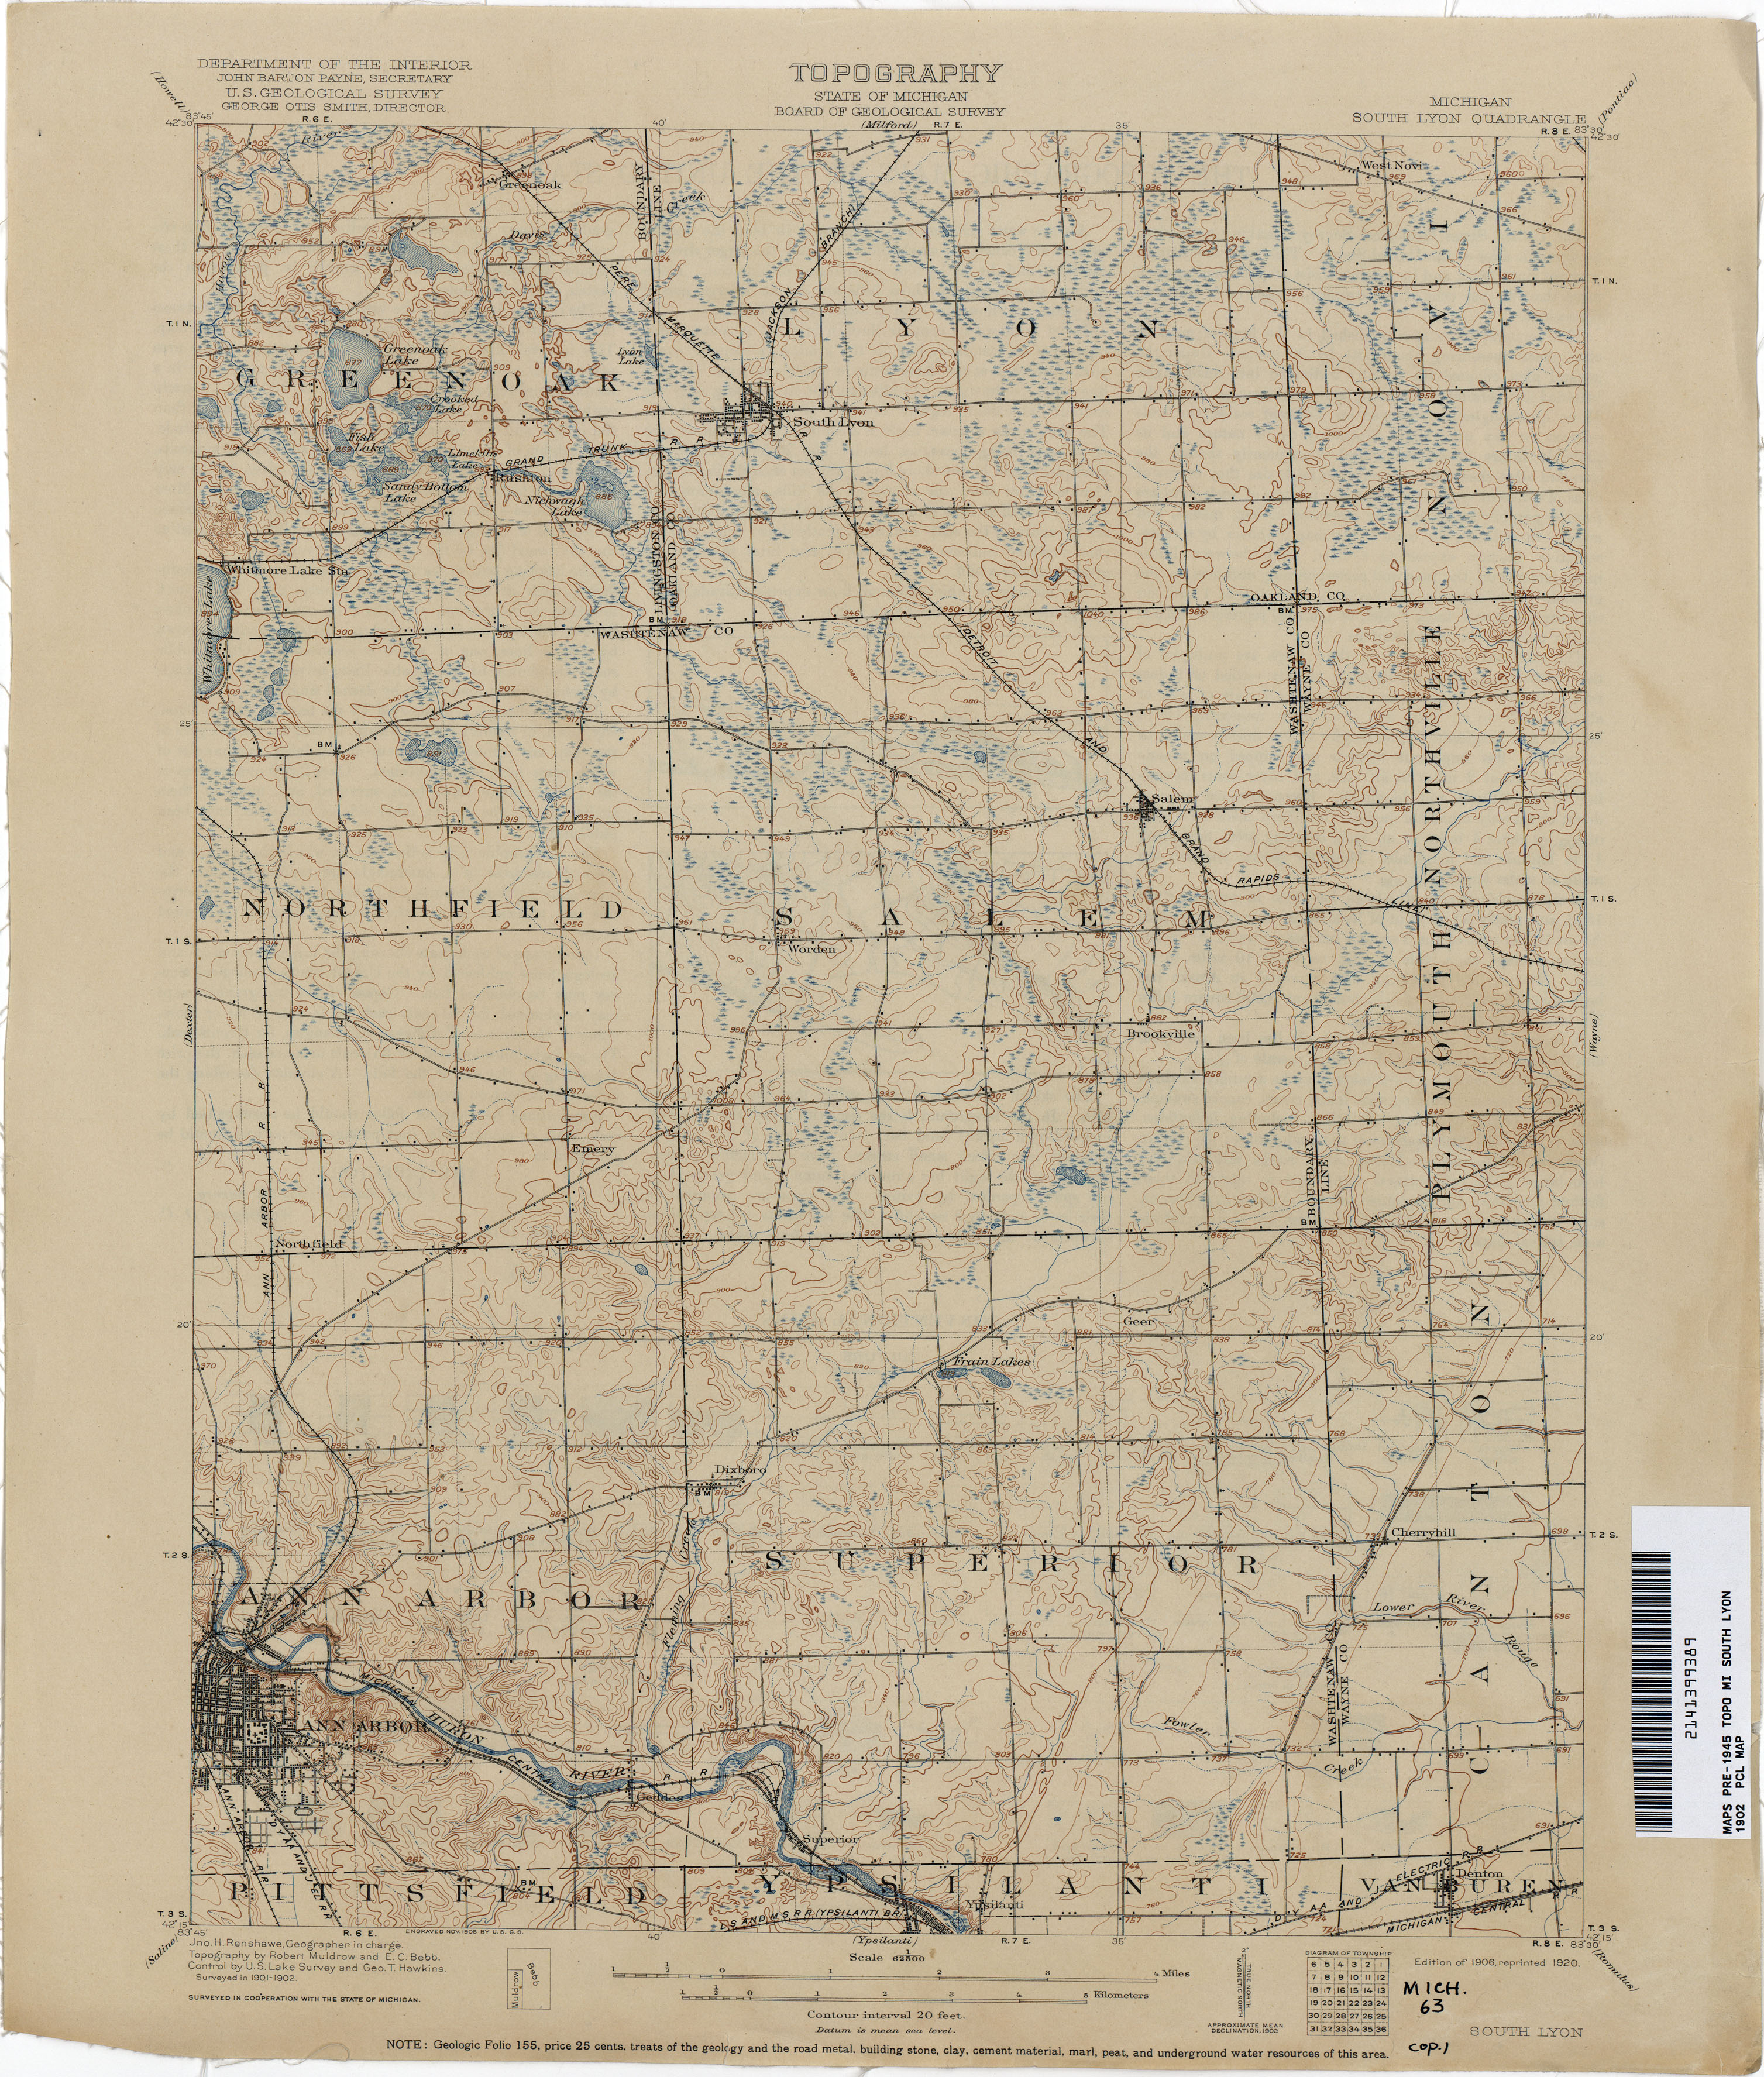 quad reprint 15x15 Prairieville Gun Lake USGS Topographic Michigan 2785585 Wayland 1959 Old Topo Map 1973